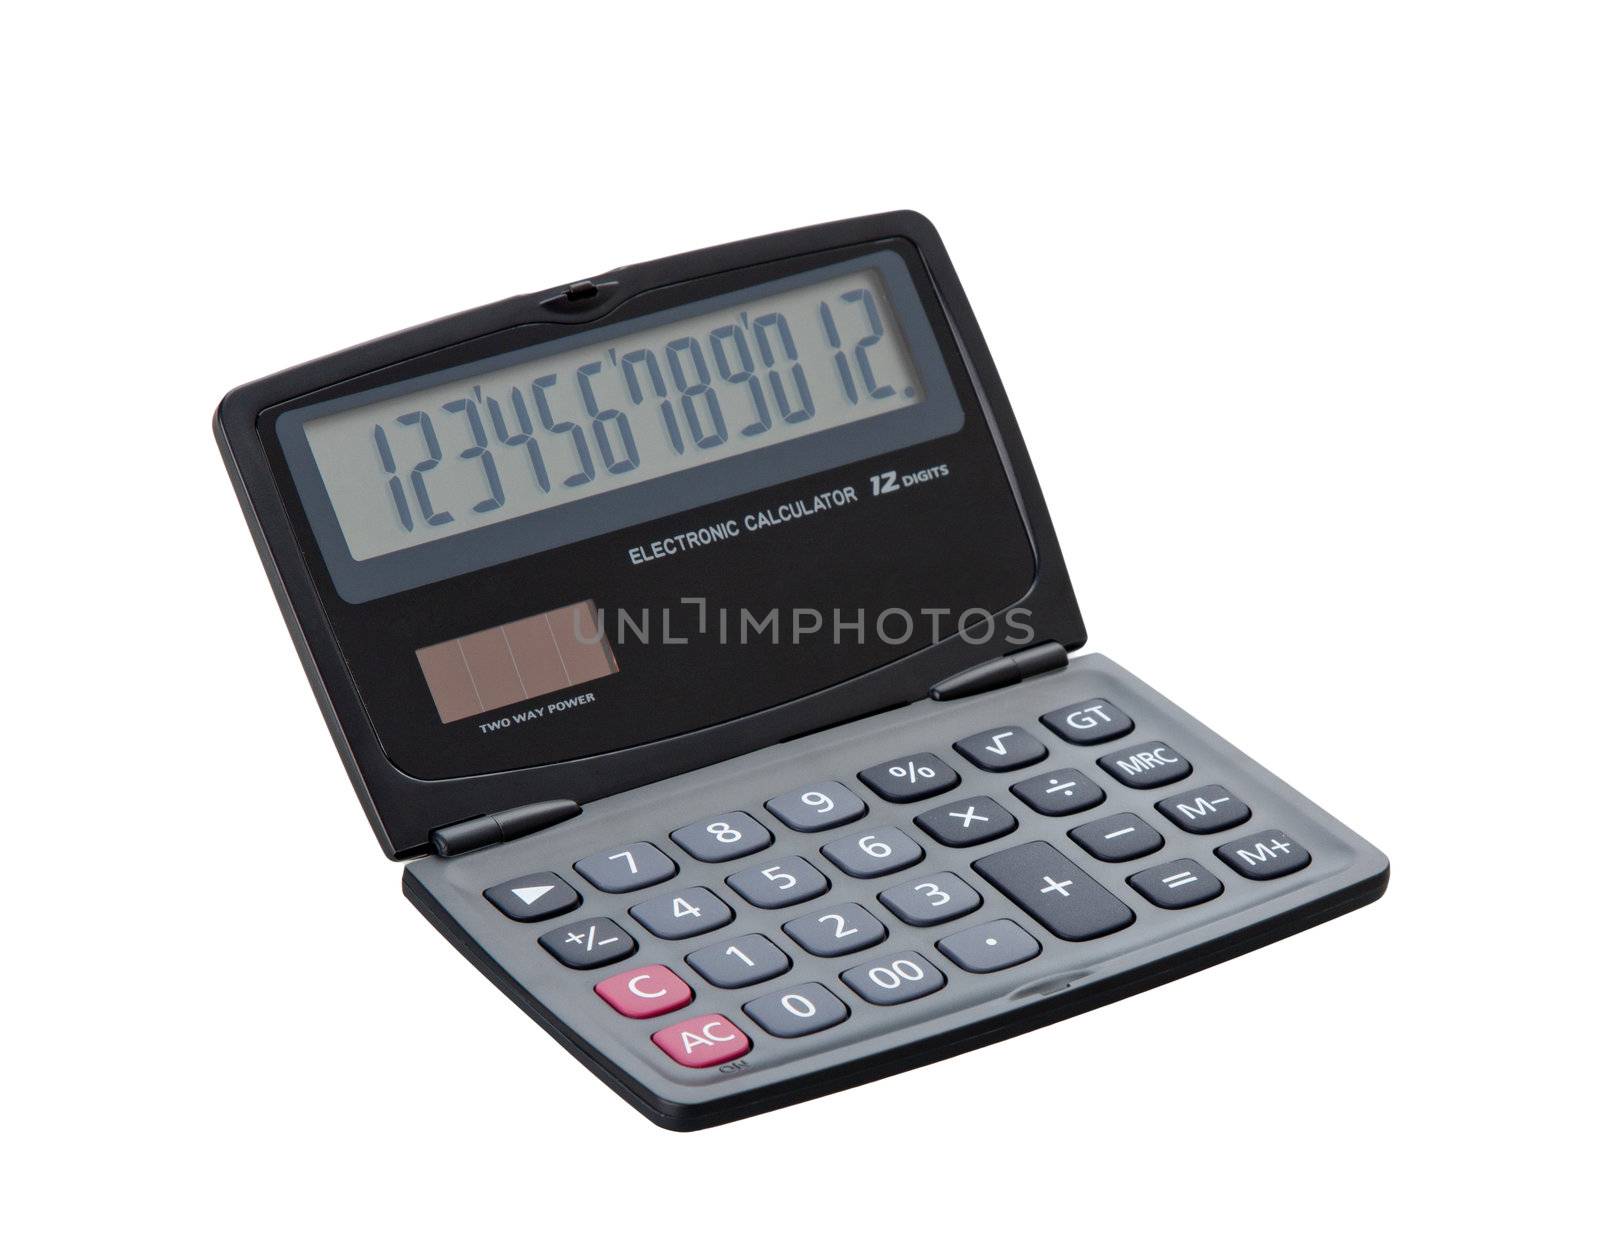 Small but smart digital calculator